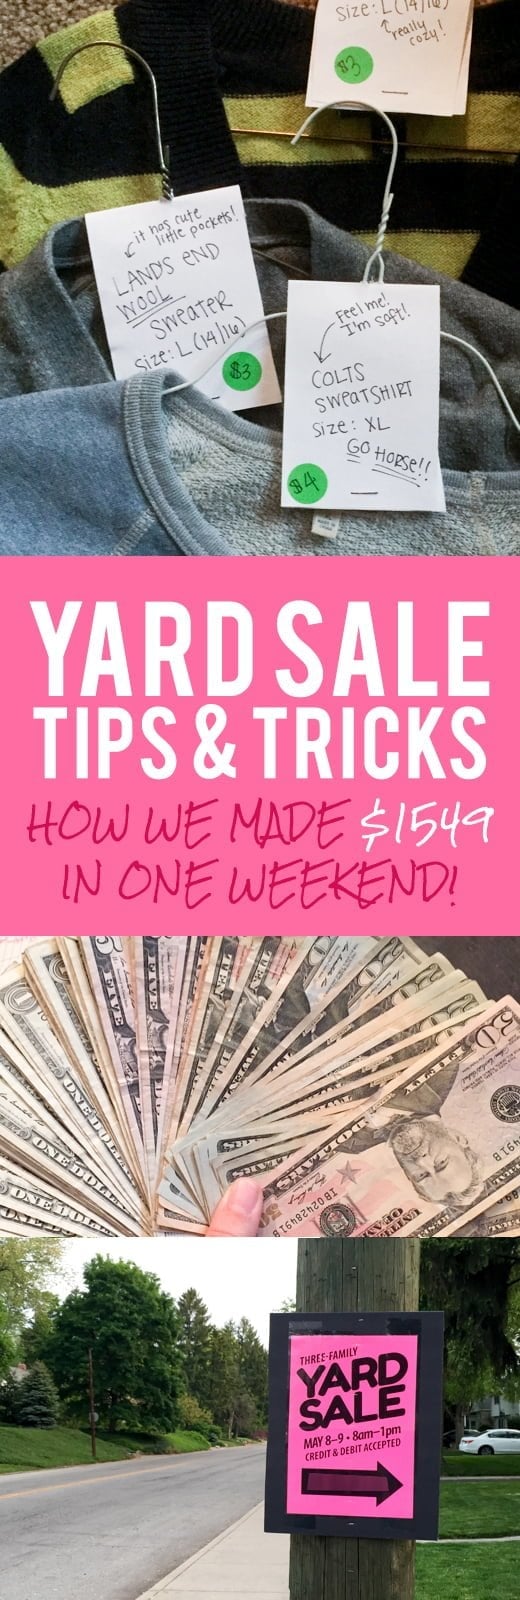 Yard Sale Tips & Tricks